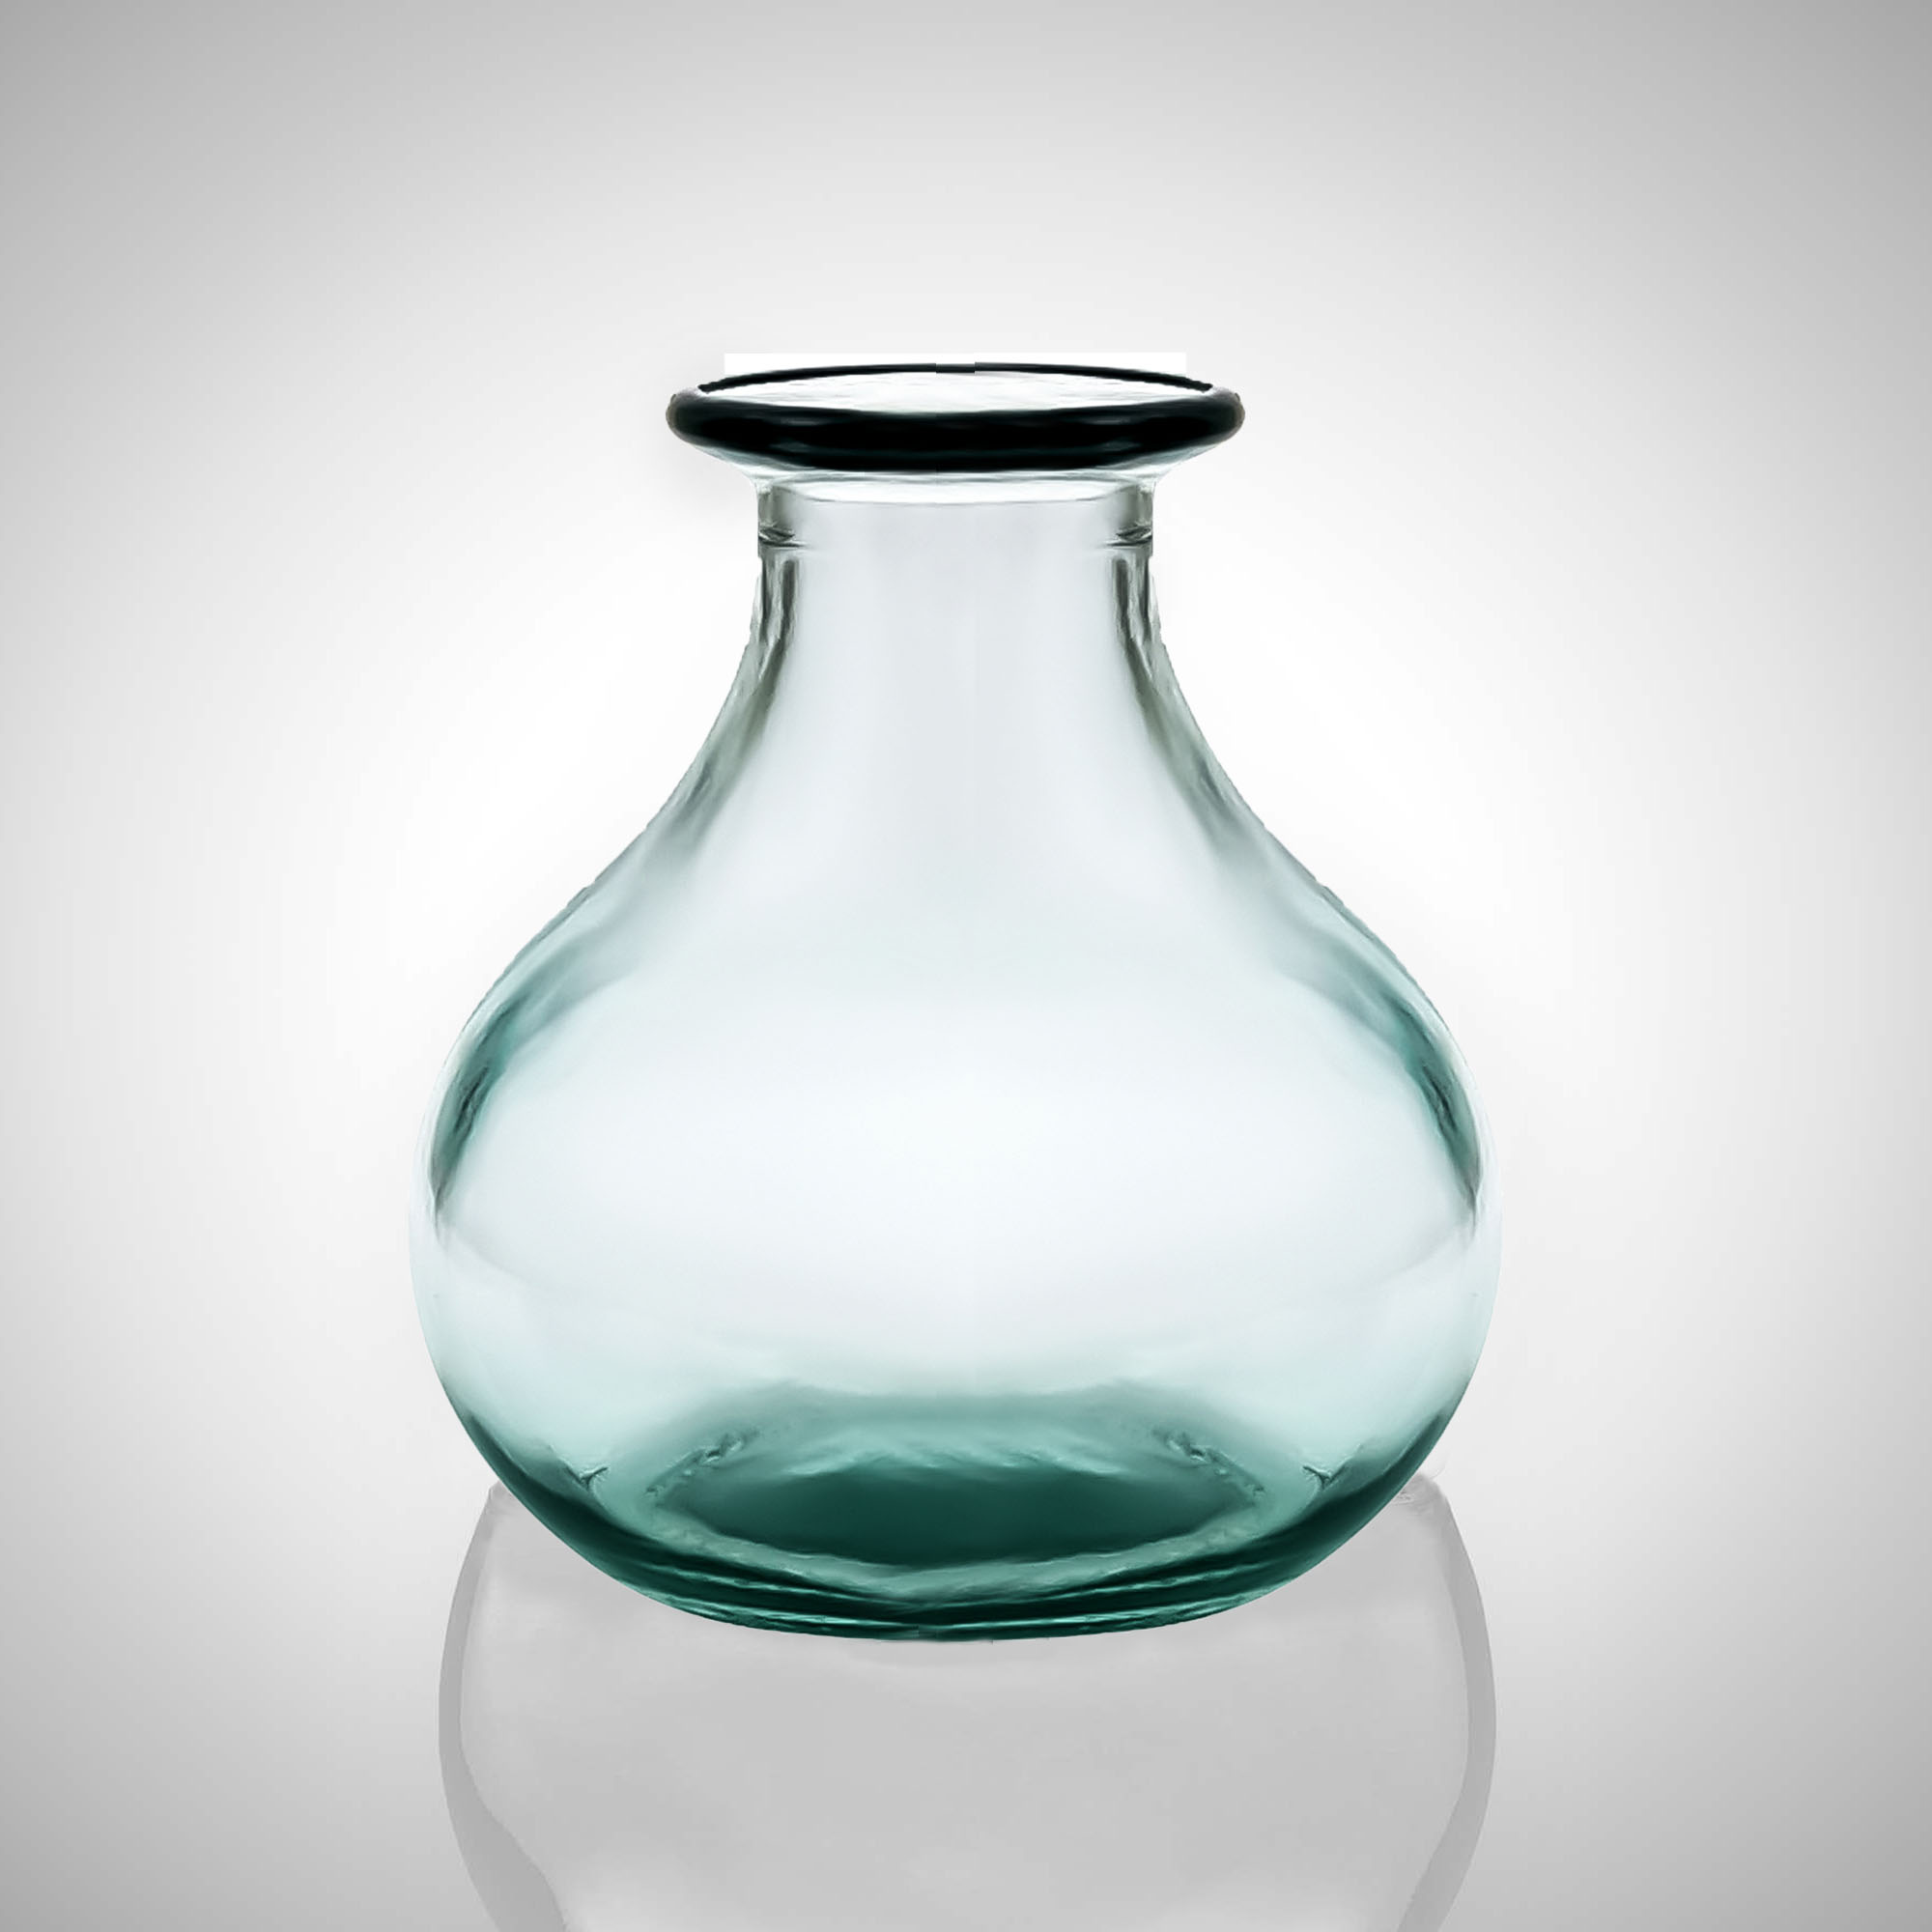 8" Gourde Glass Vase - Clear